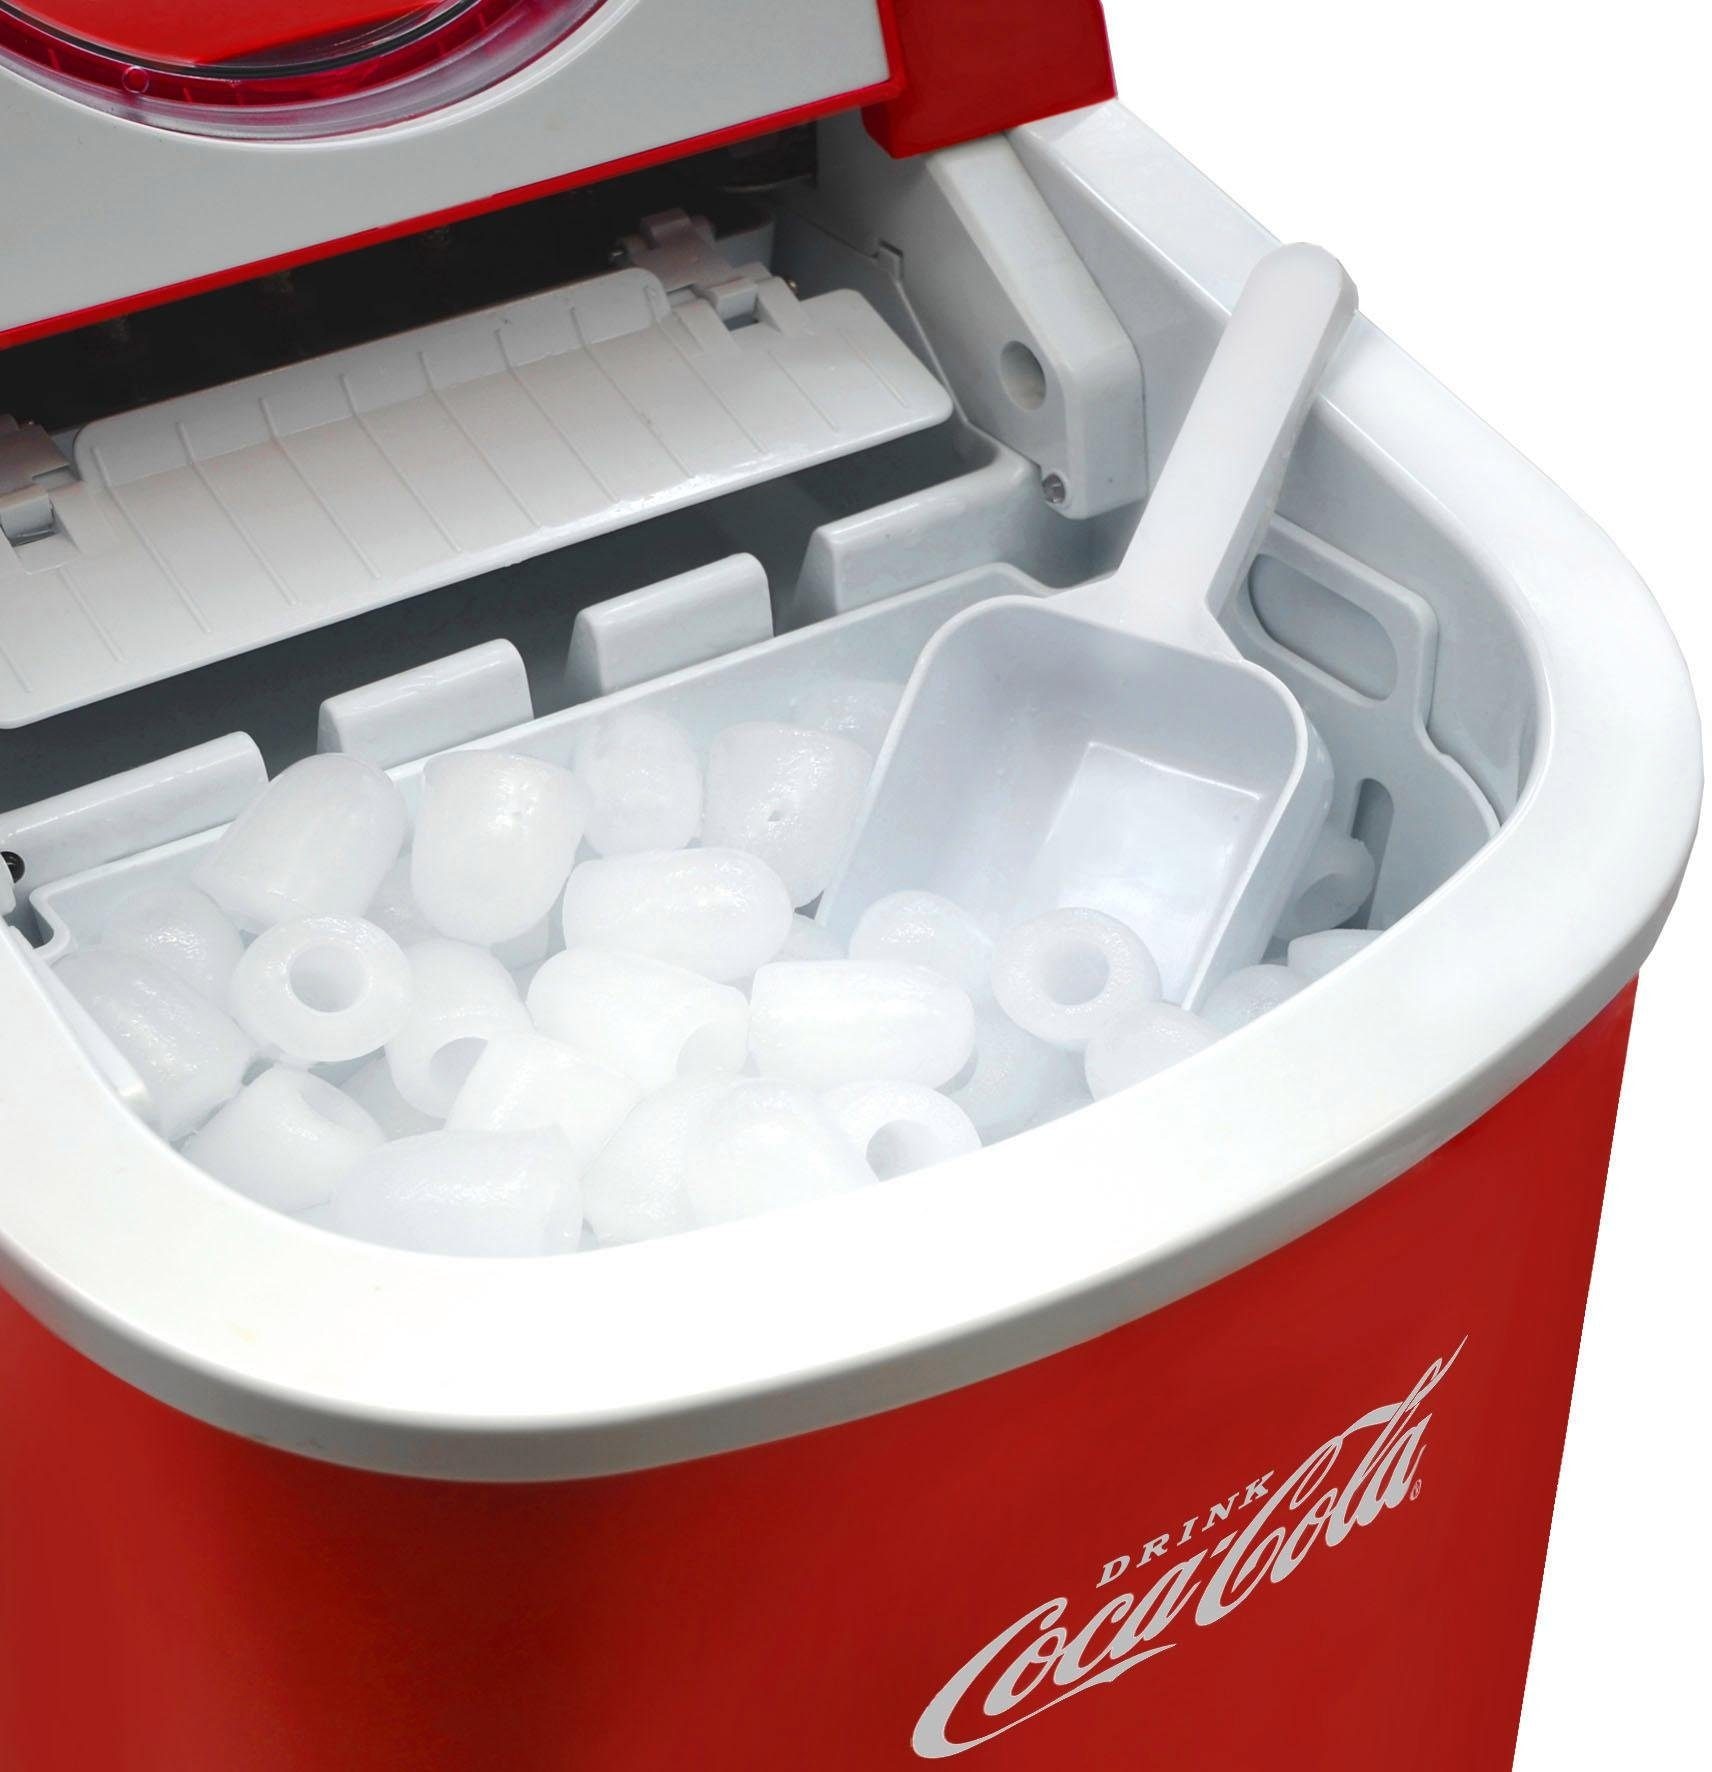 SALCO Eiswürfelmaschine »Coca-Cola SEB-14CC«